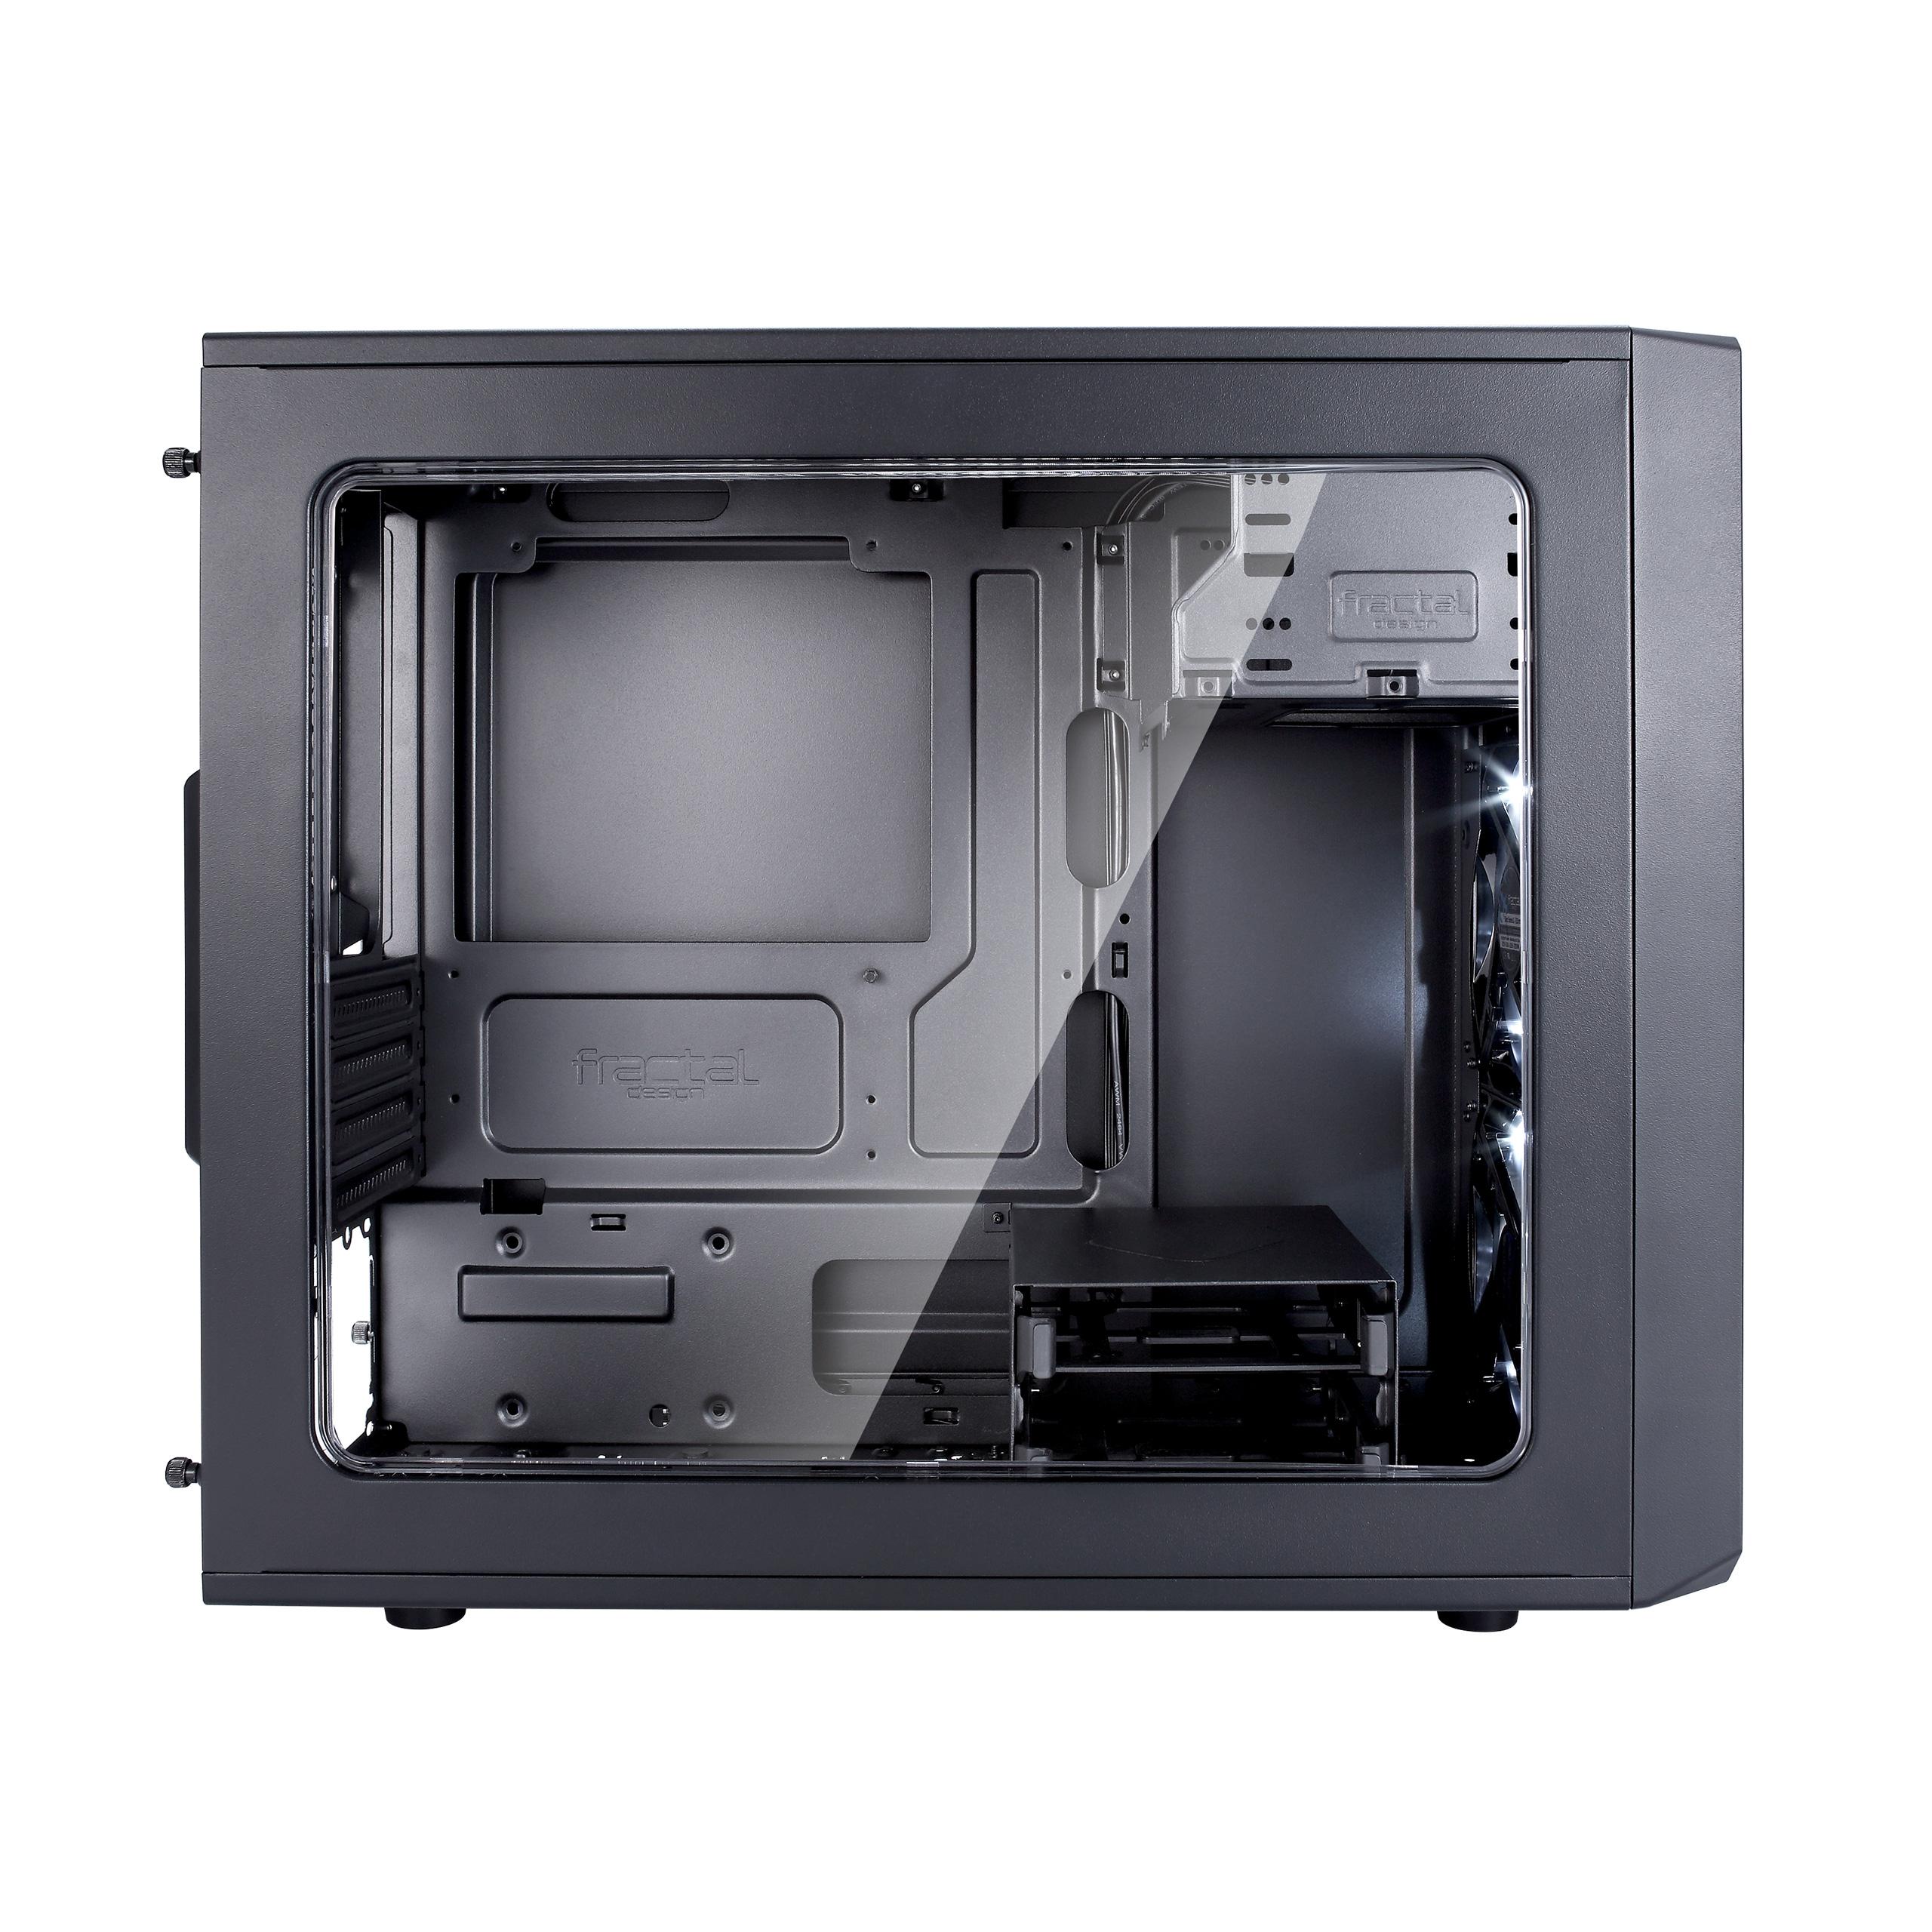 Fractal Design Focus G Mini Black Window